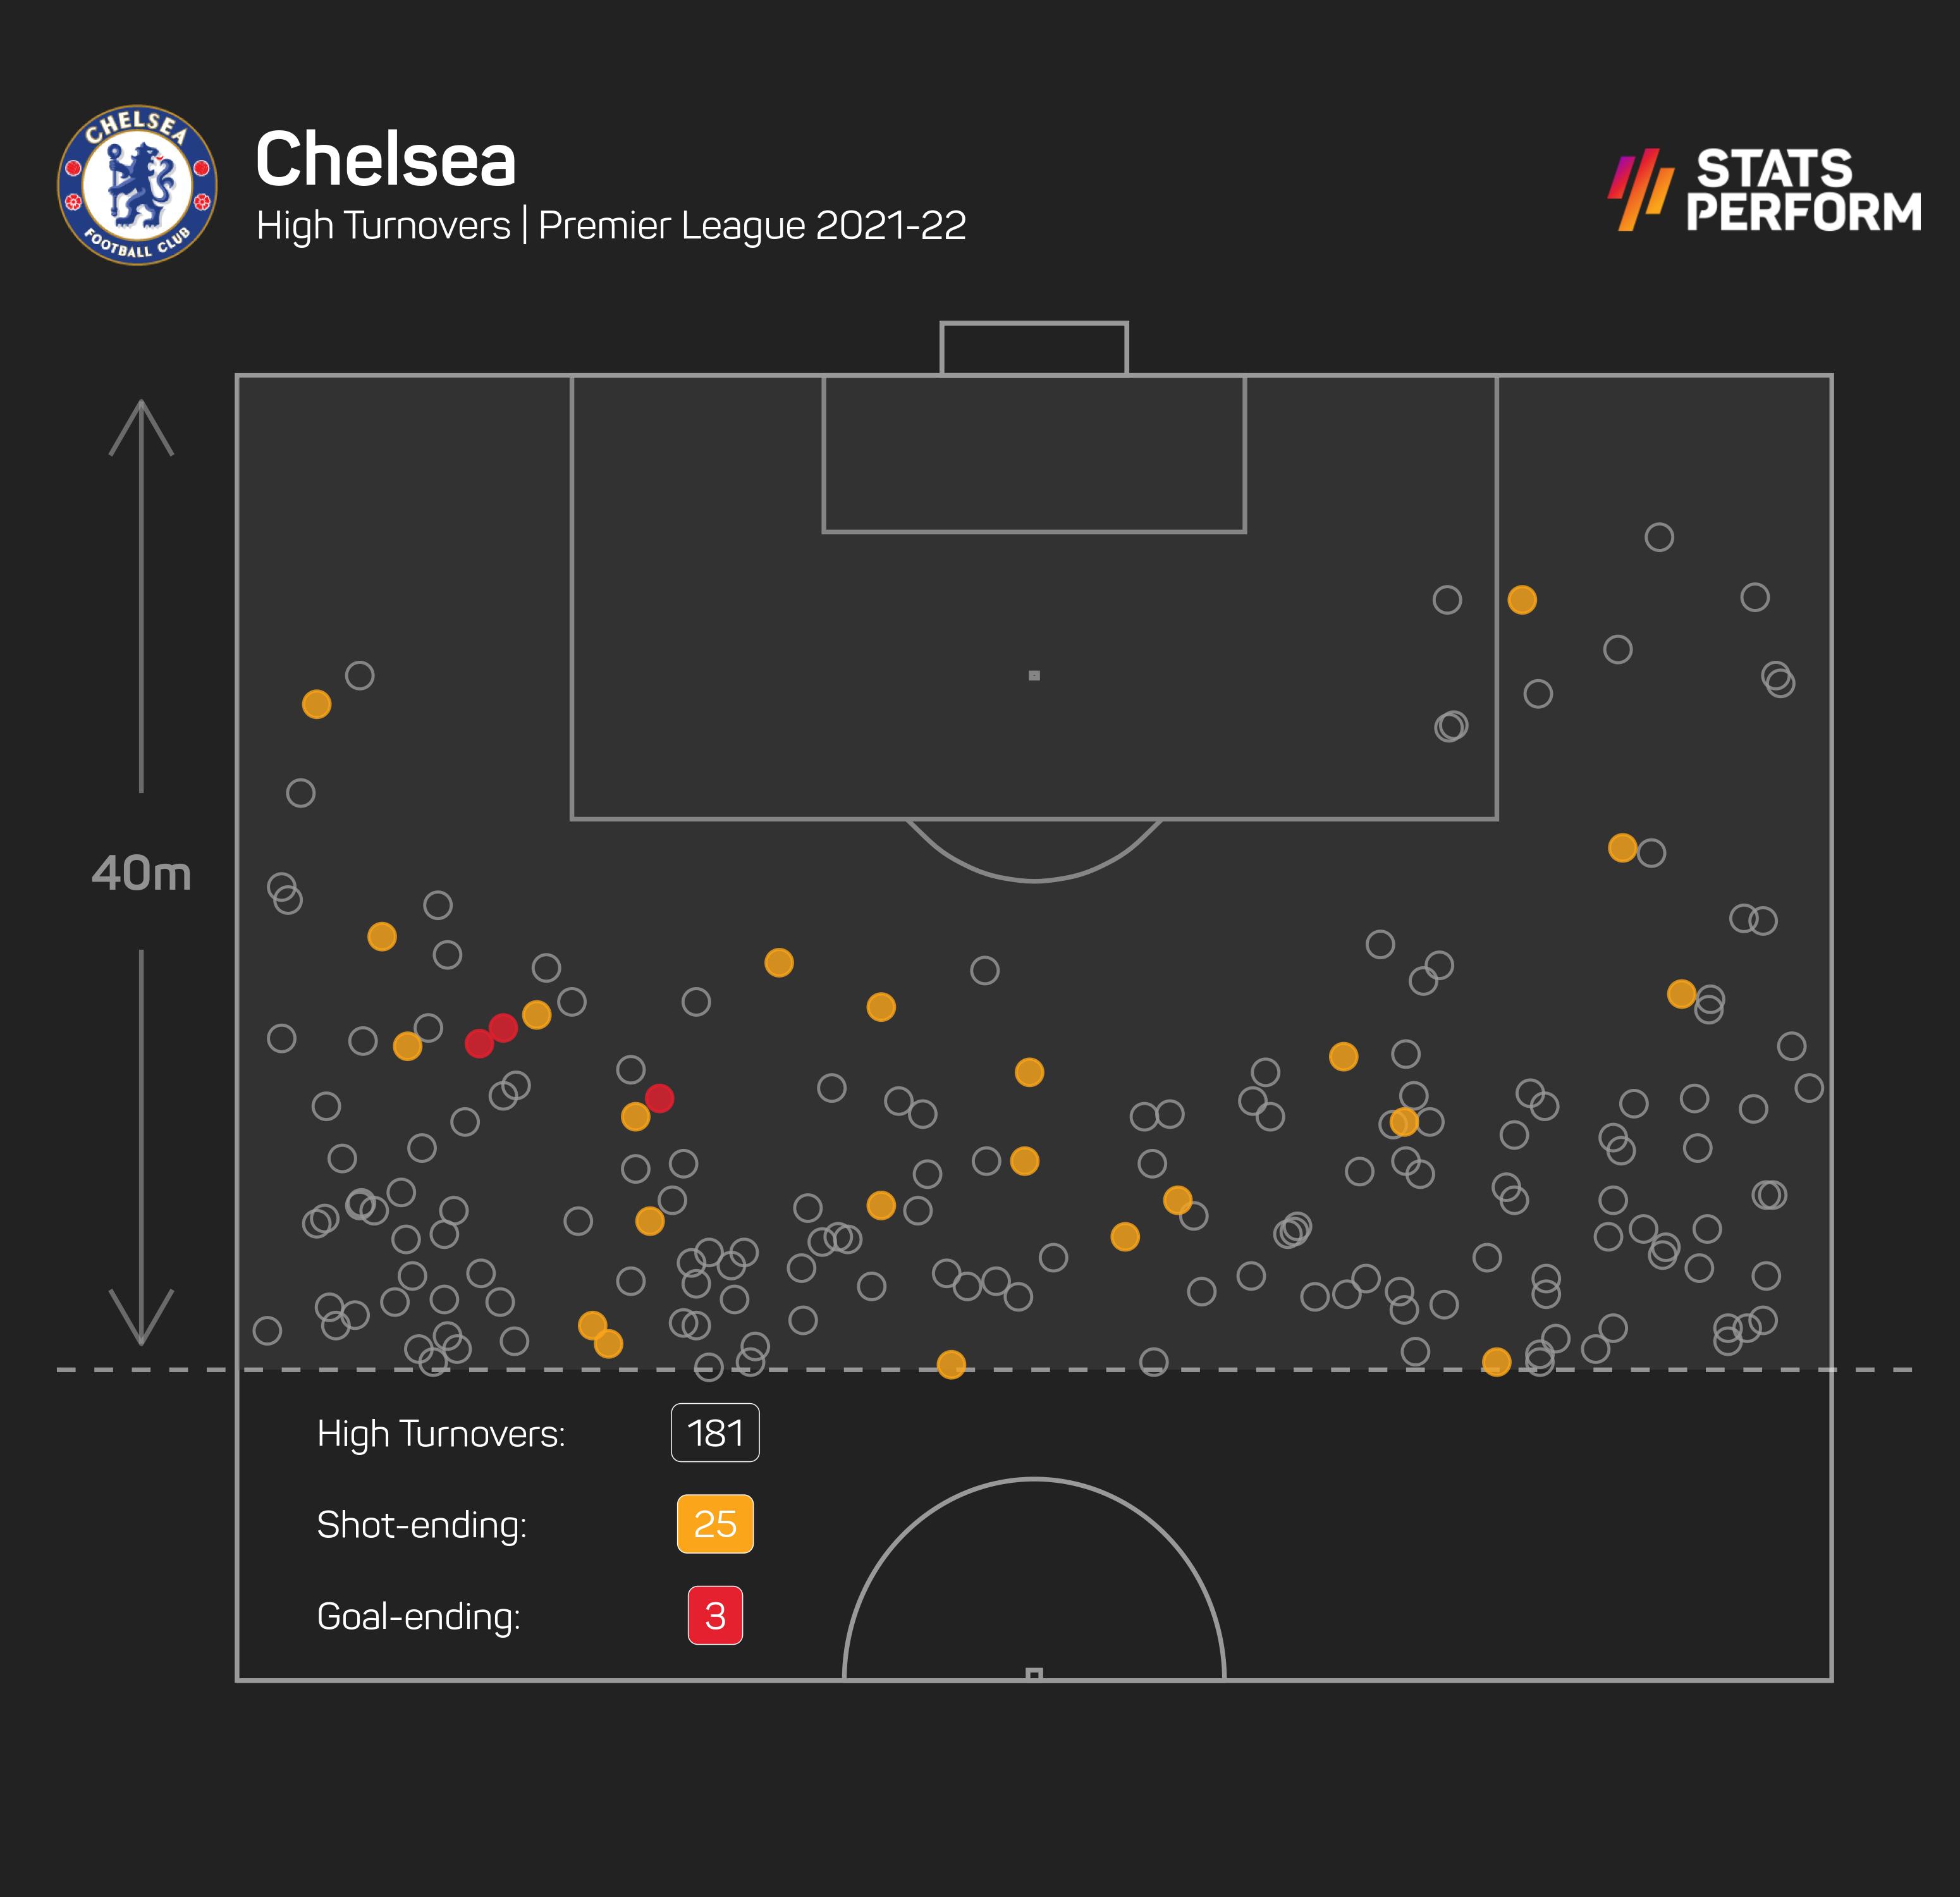 Chelsea high turnovers